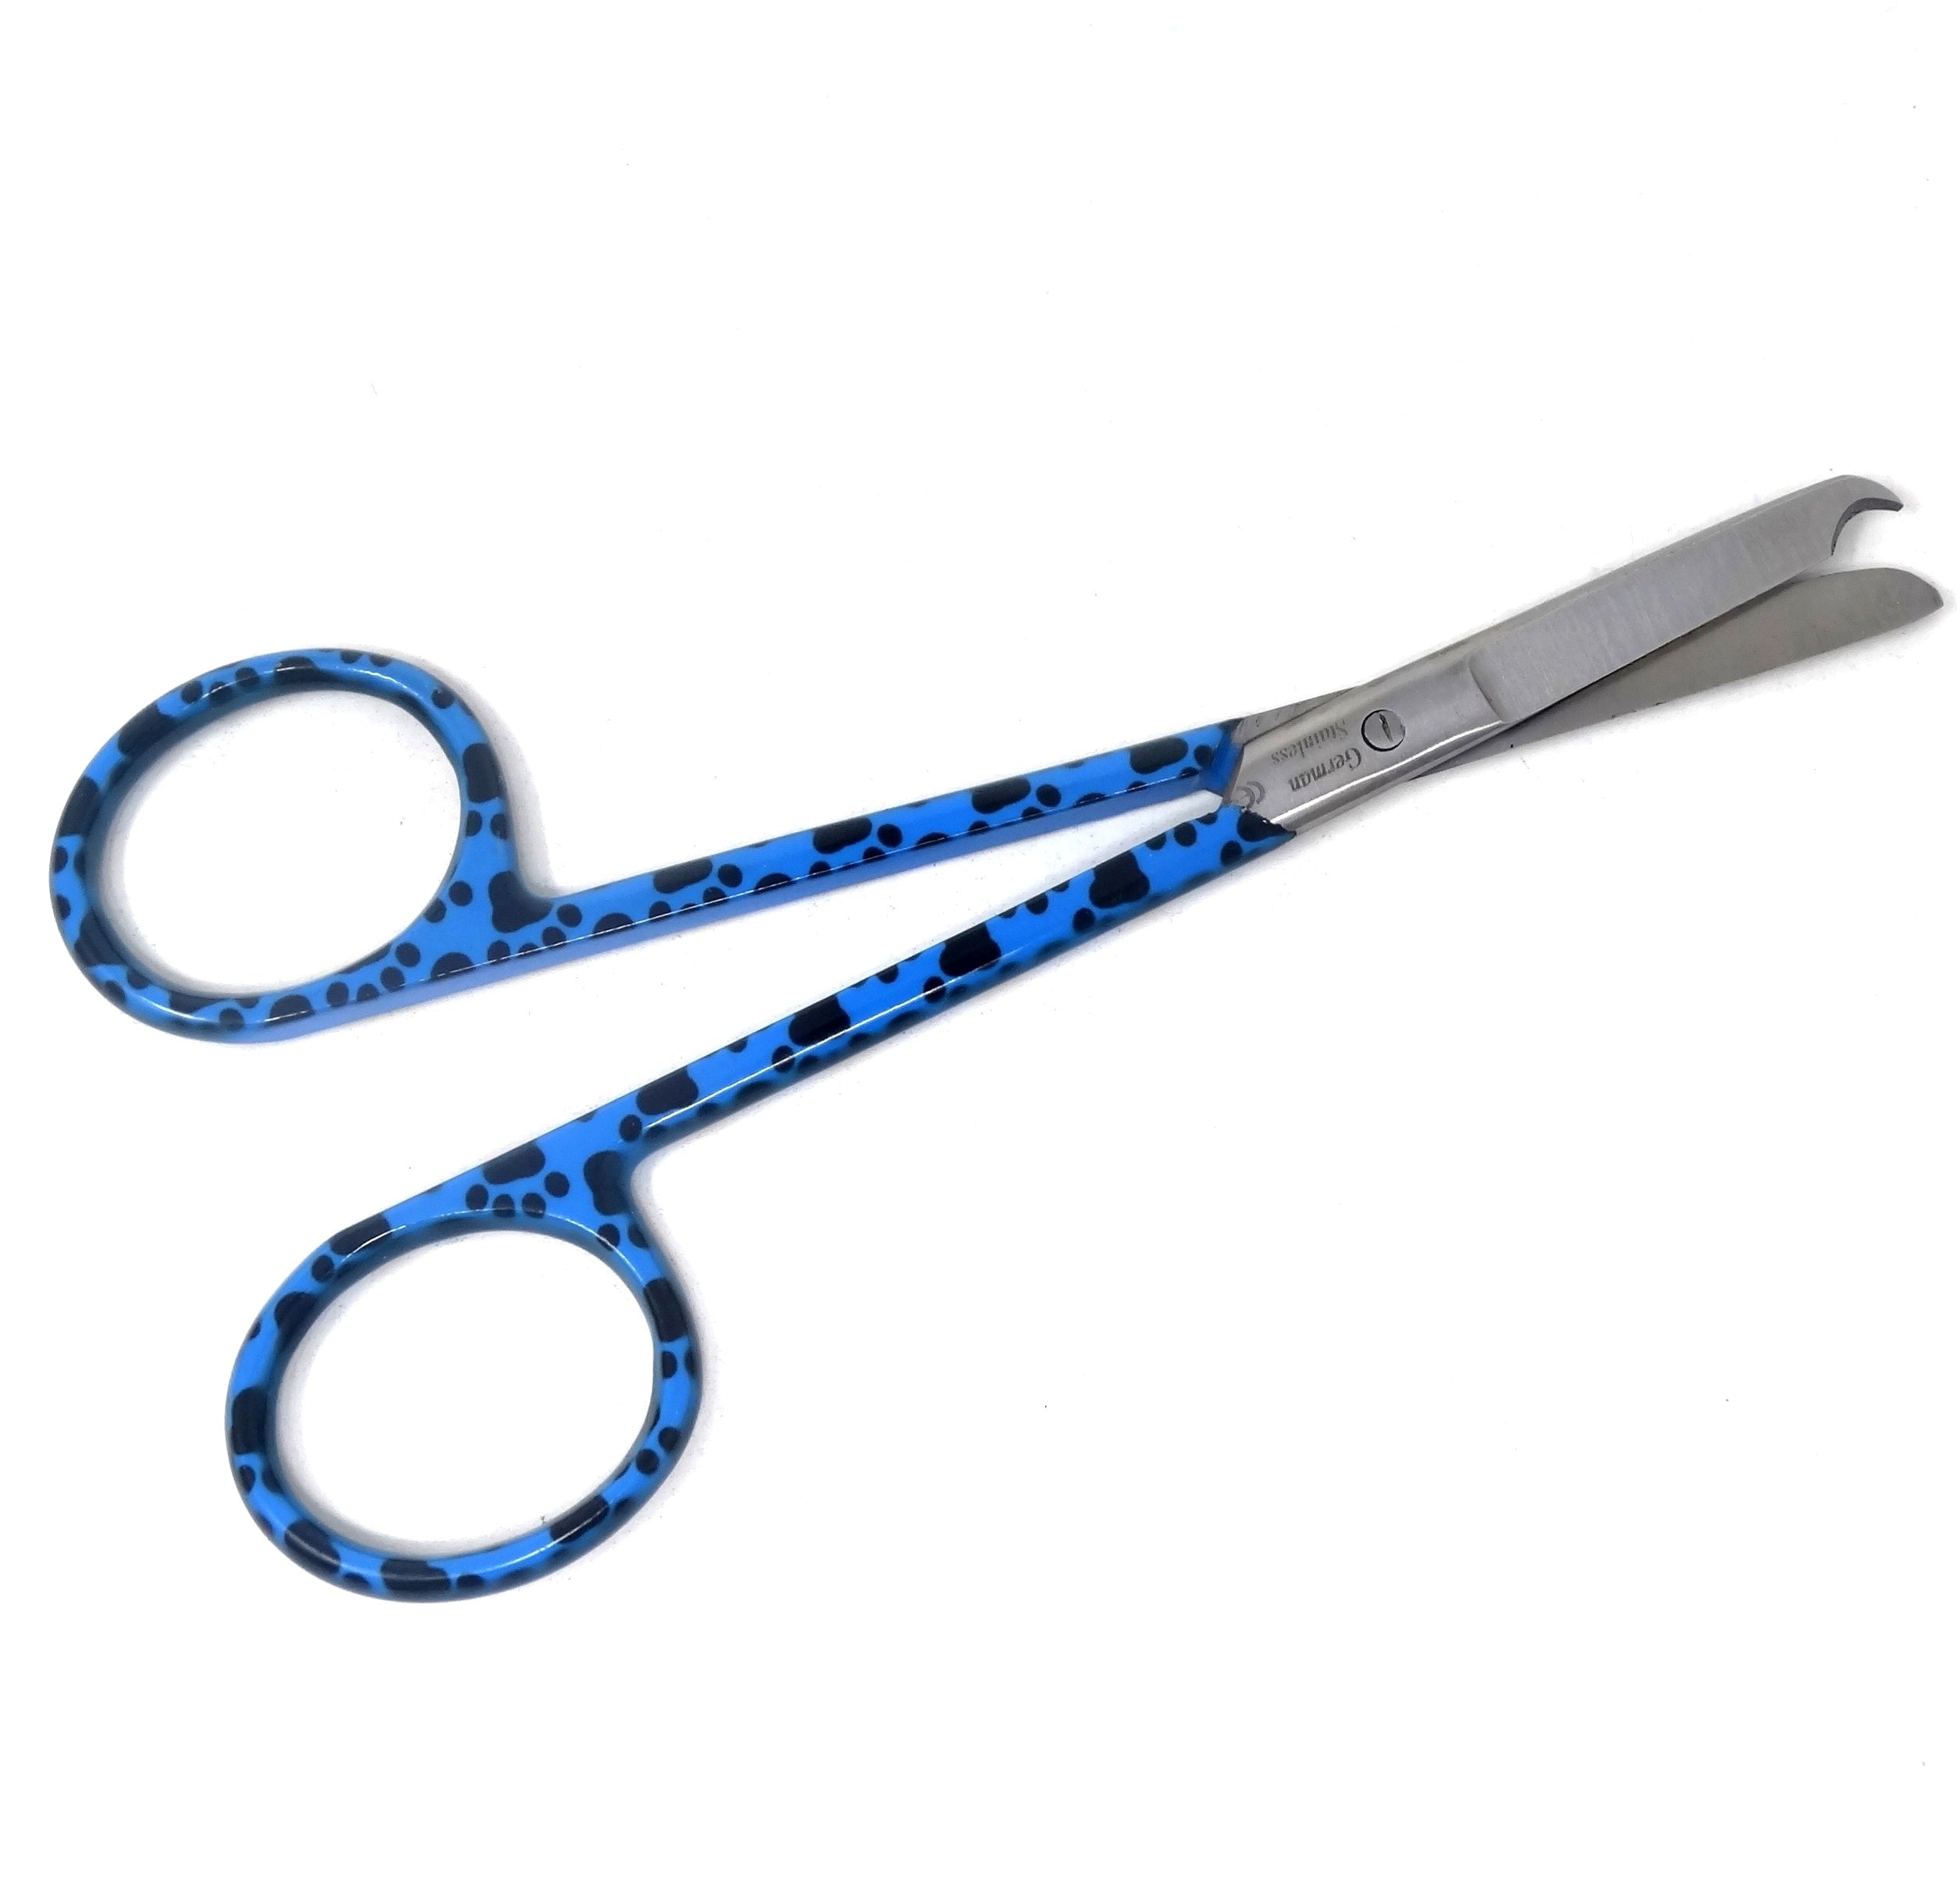 Decorative Travel 3.5 inch Stork Scissors - Super Sharp Scissors for